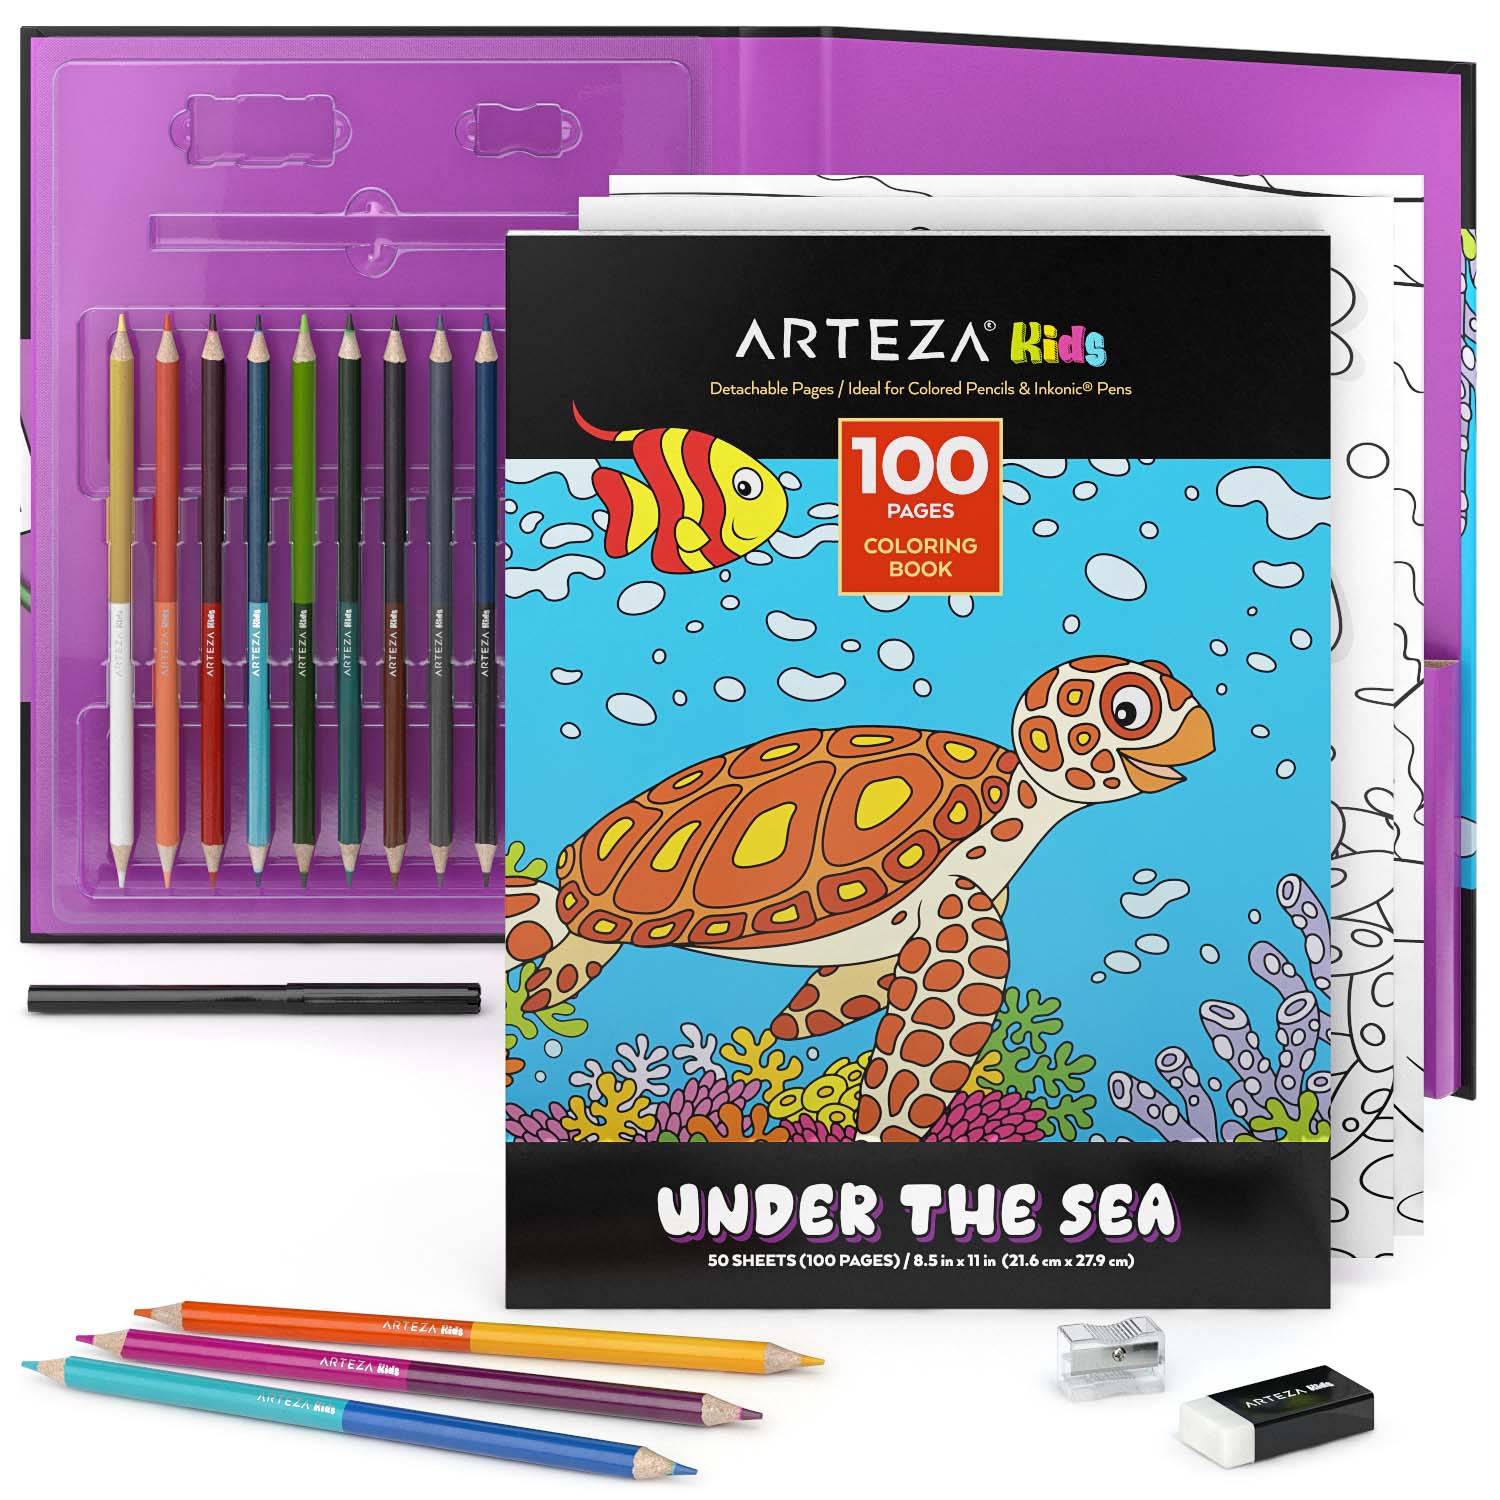 Ocean Coloring Books For Kids: Ocean Coloring Books For Kids